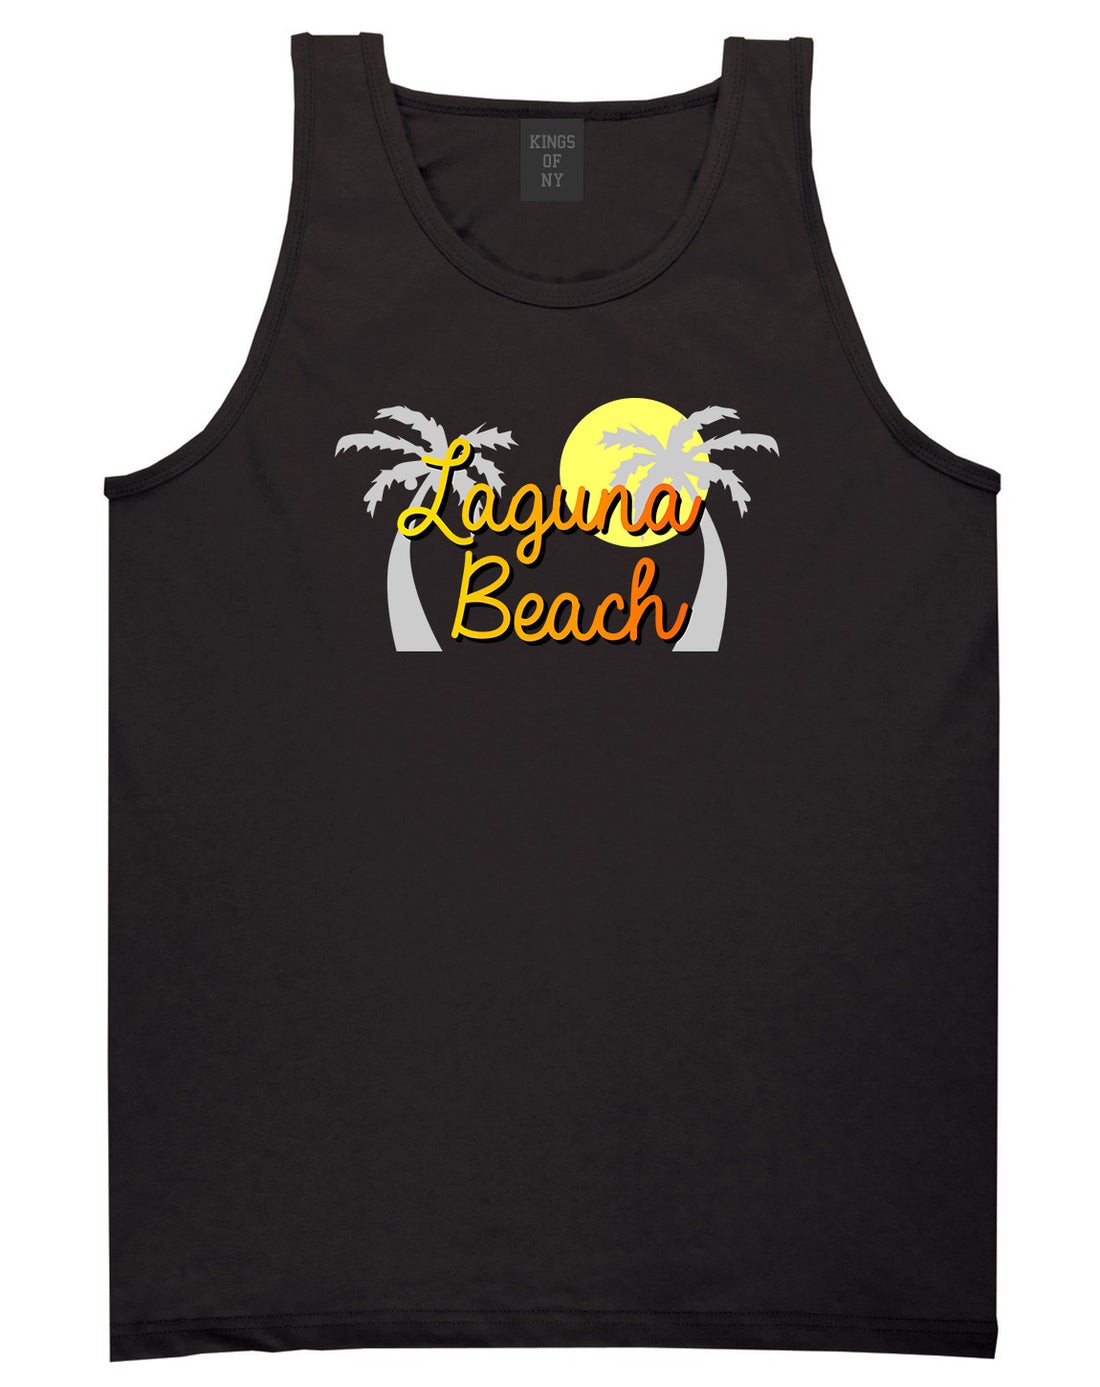 Laguna Beach California Mens Tank Top Shirt Black by Kings Of NY